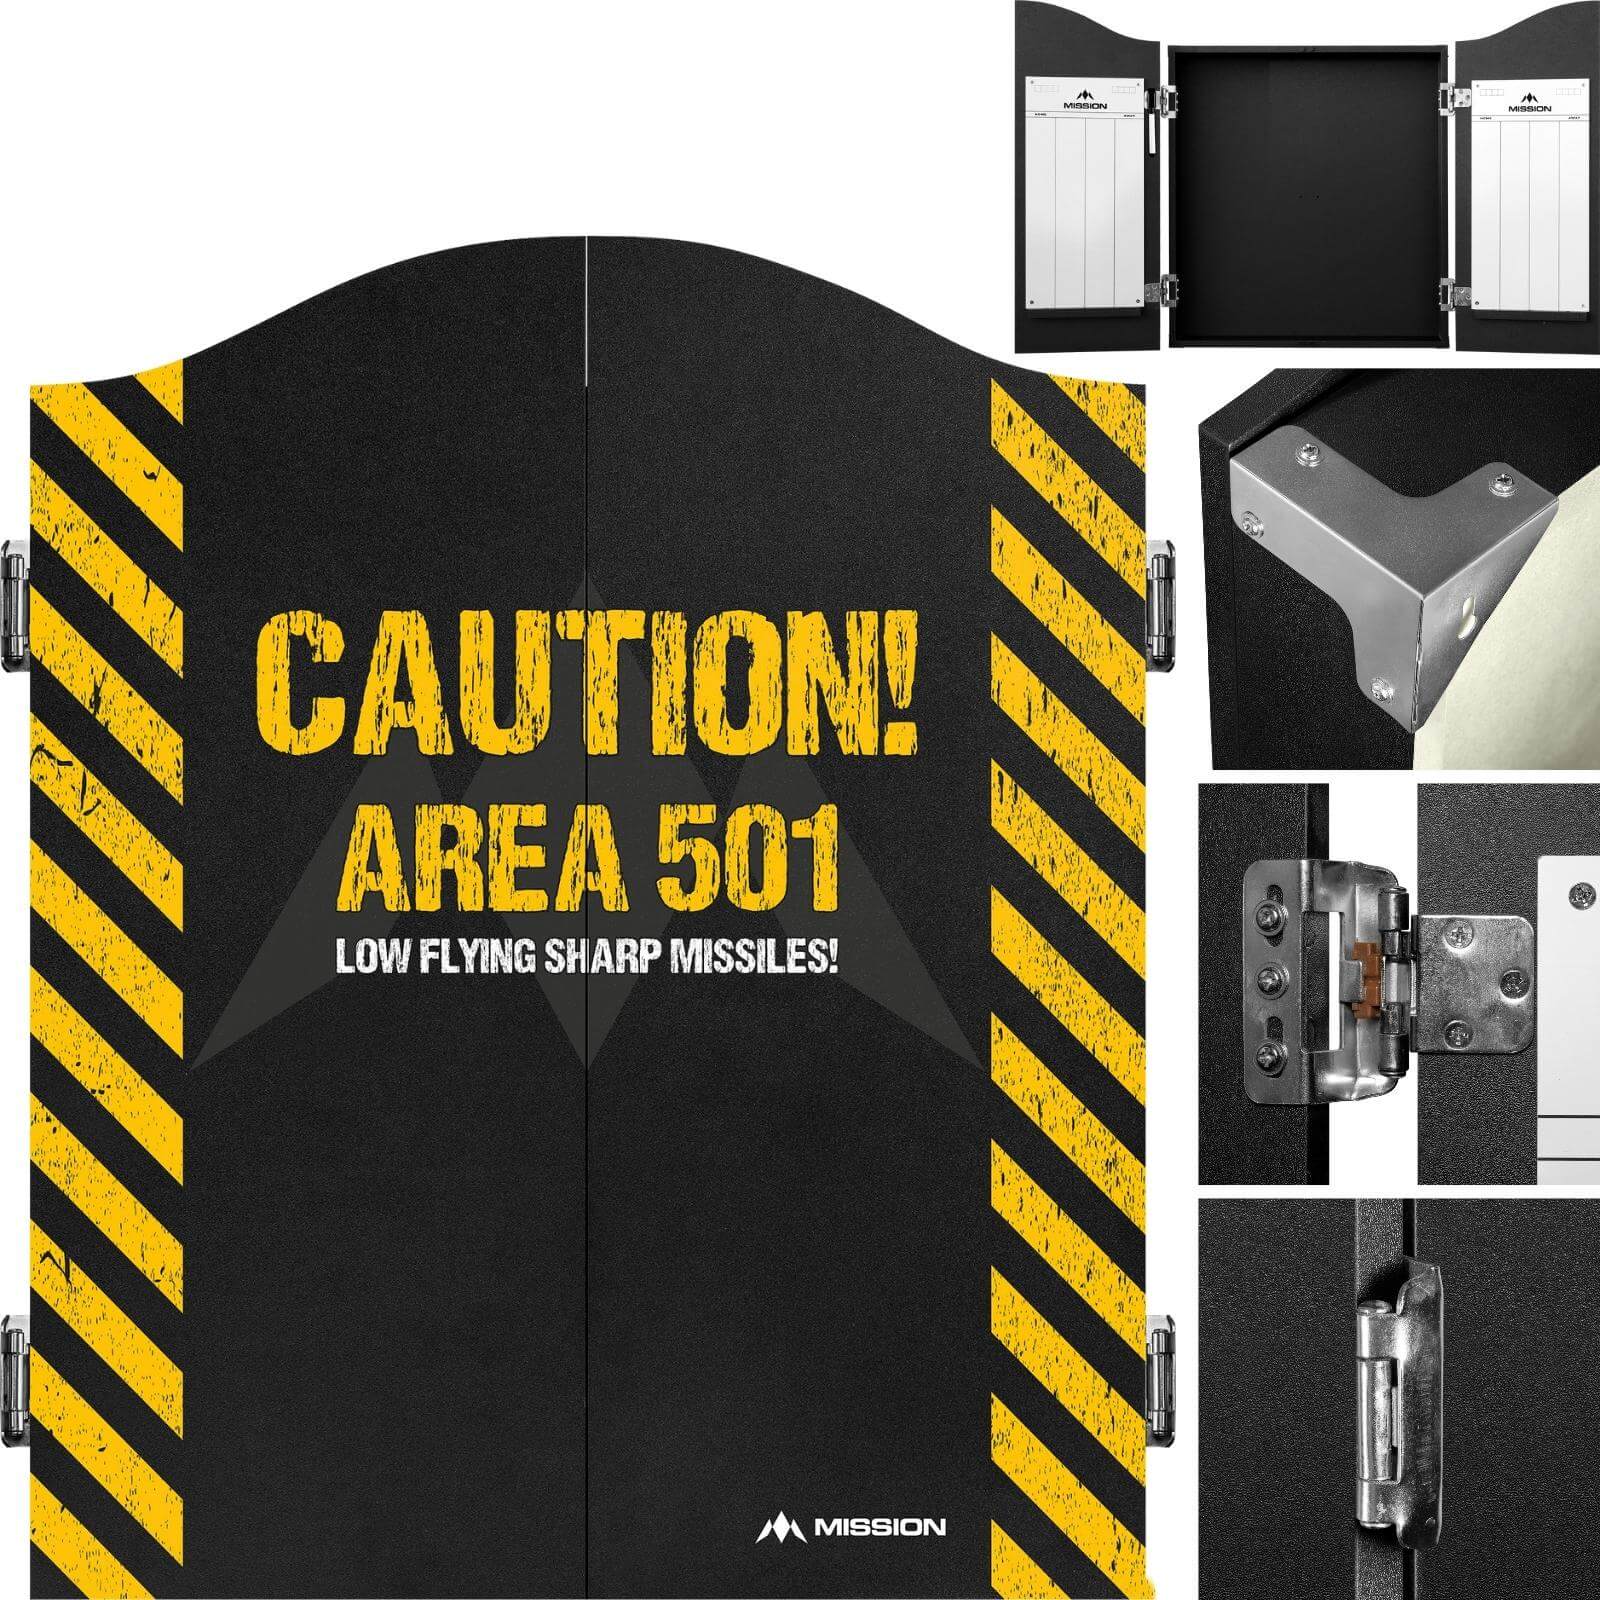 Dartboard Accessories - Mission - Dartboard Cabinet - Deluxe Quality - Area 501 - Caution 